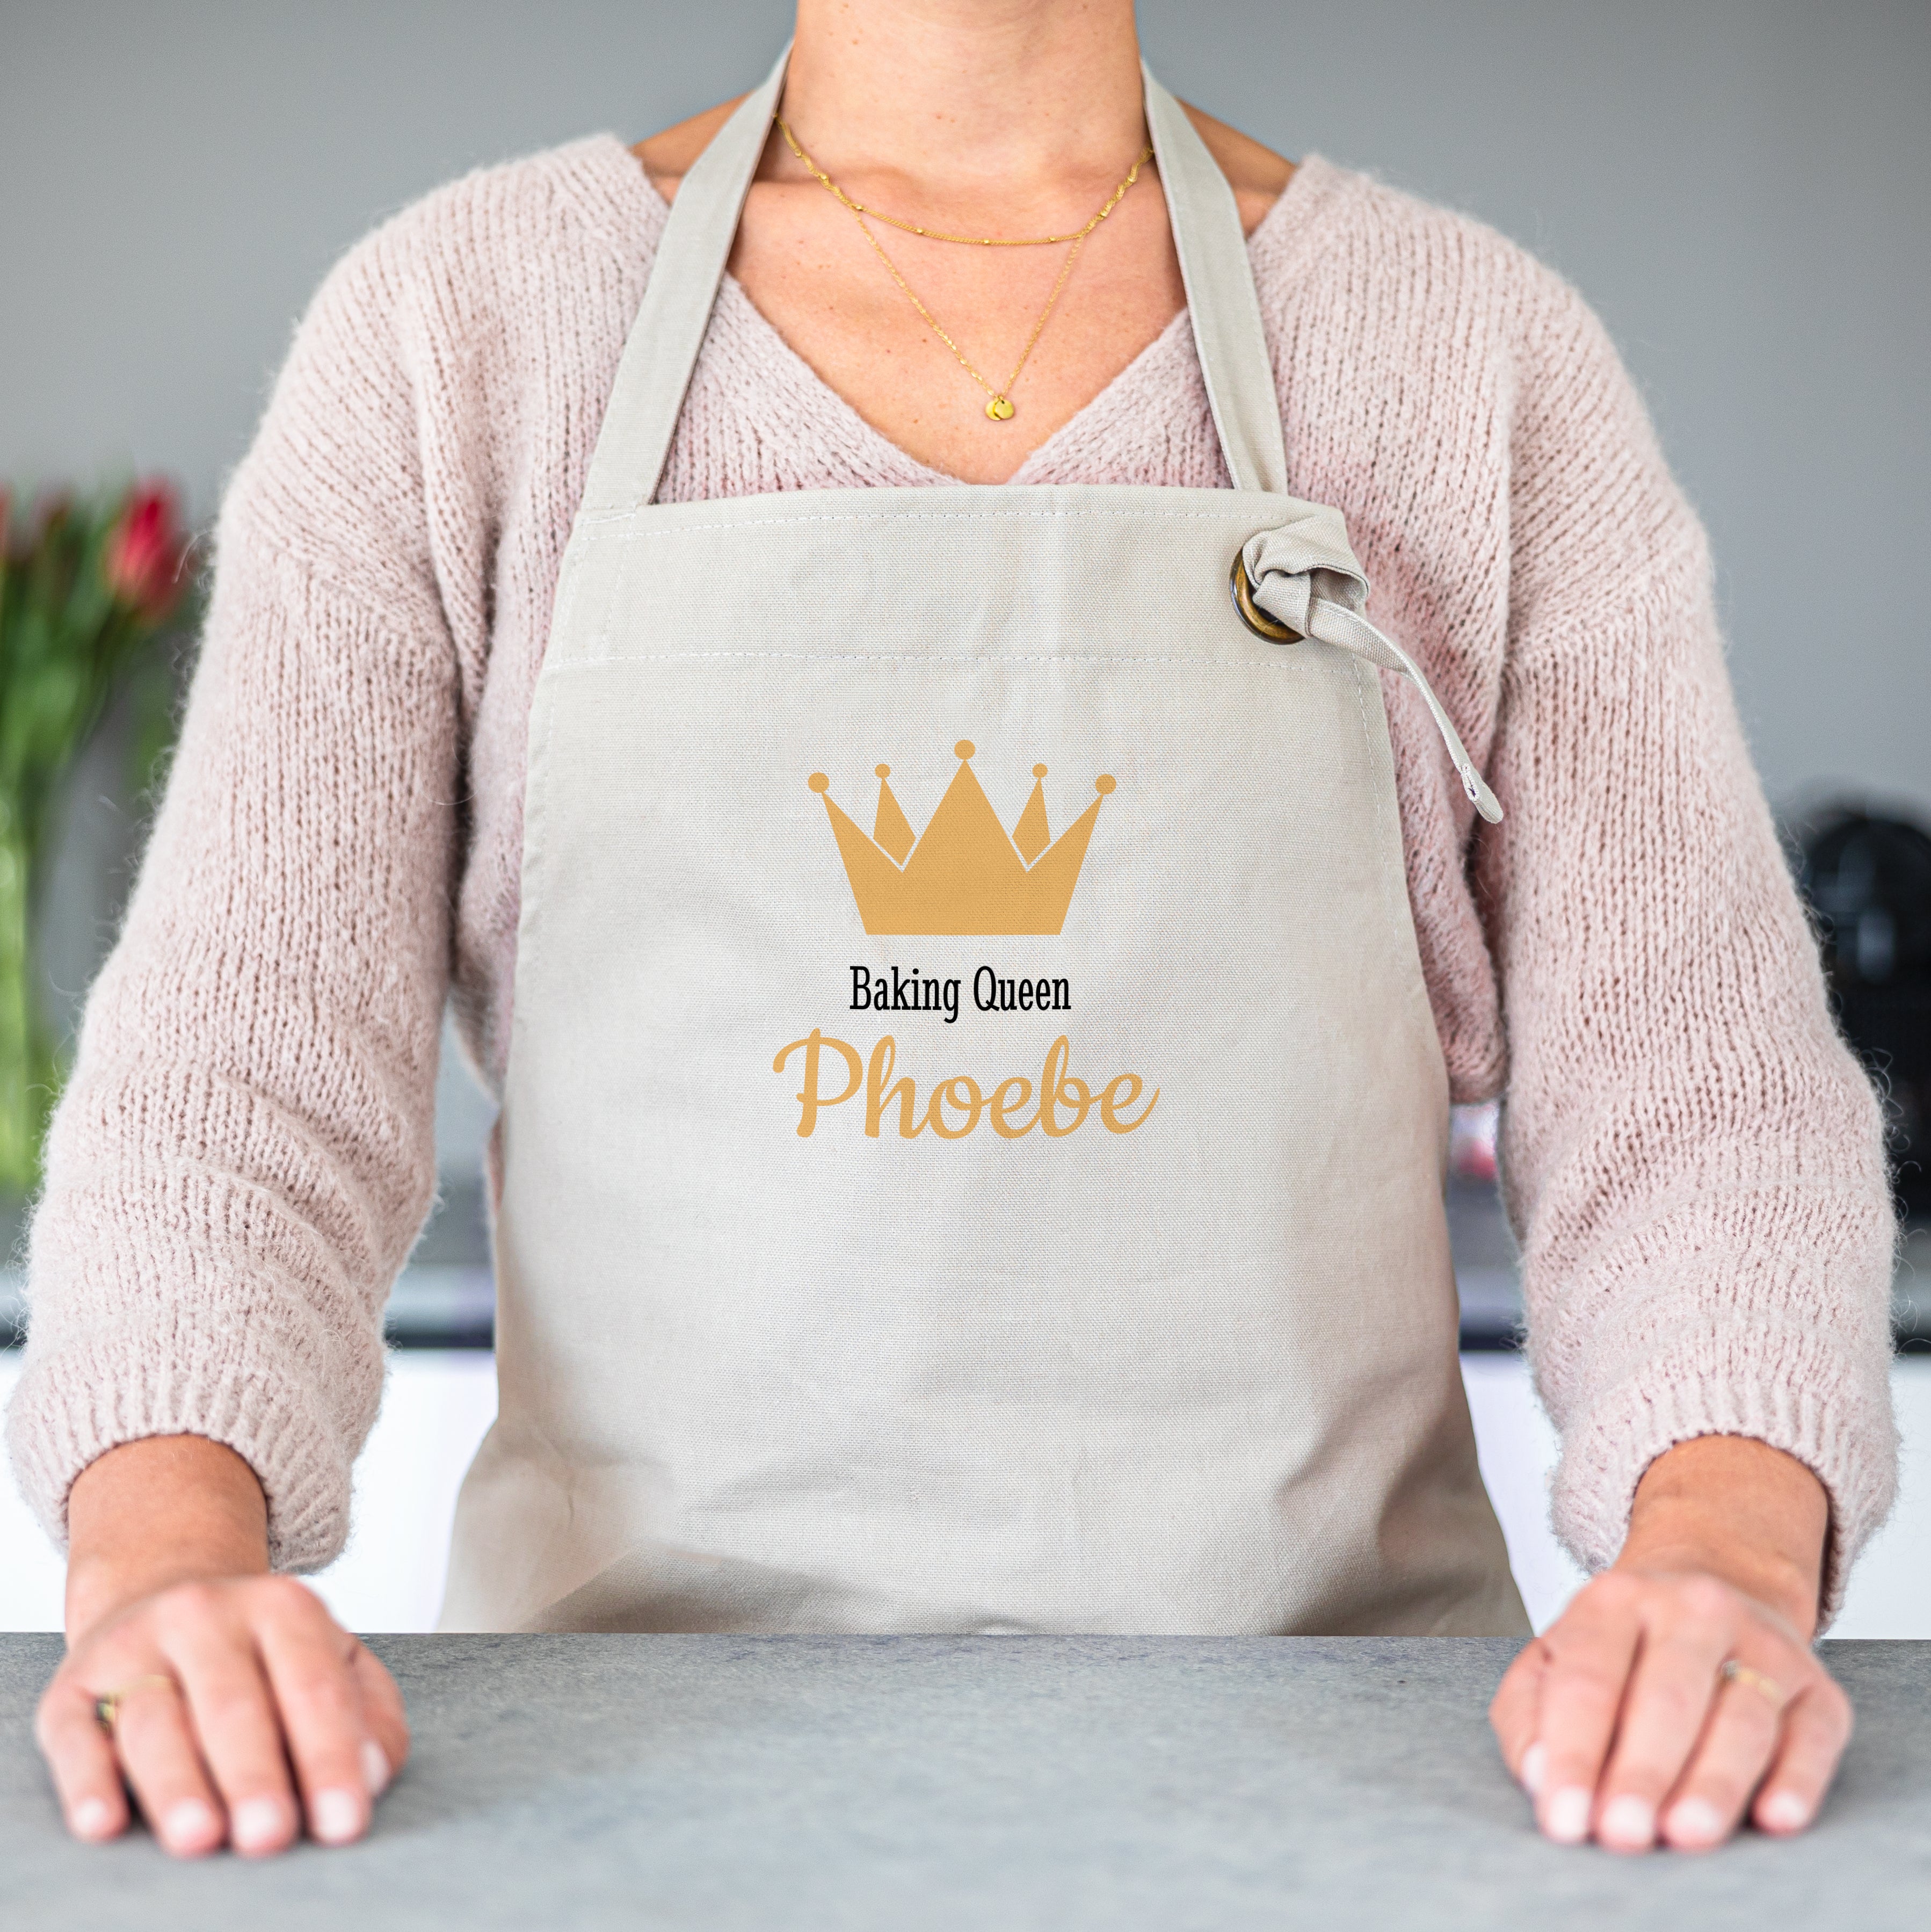 Personalised kitchen apron - Sand